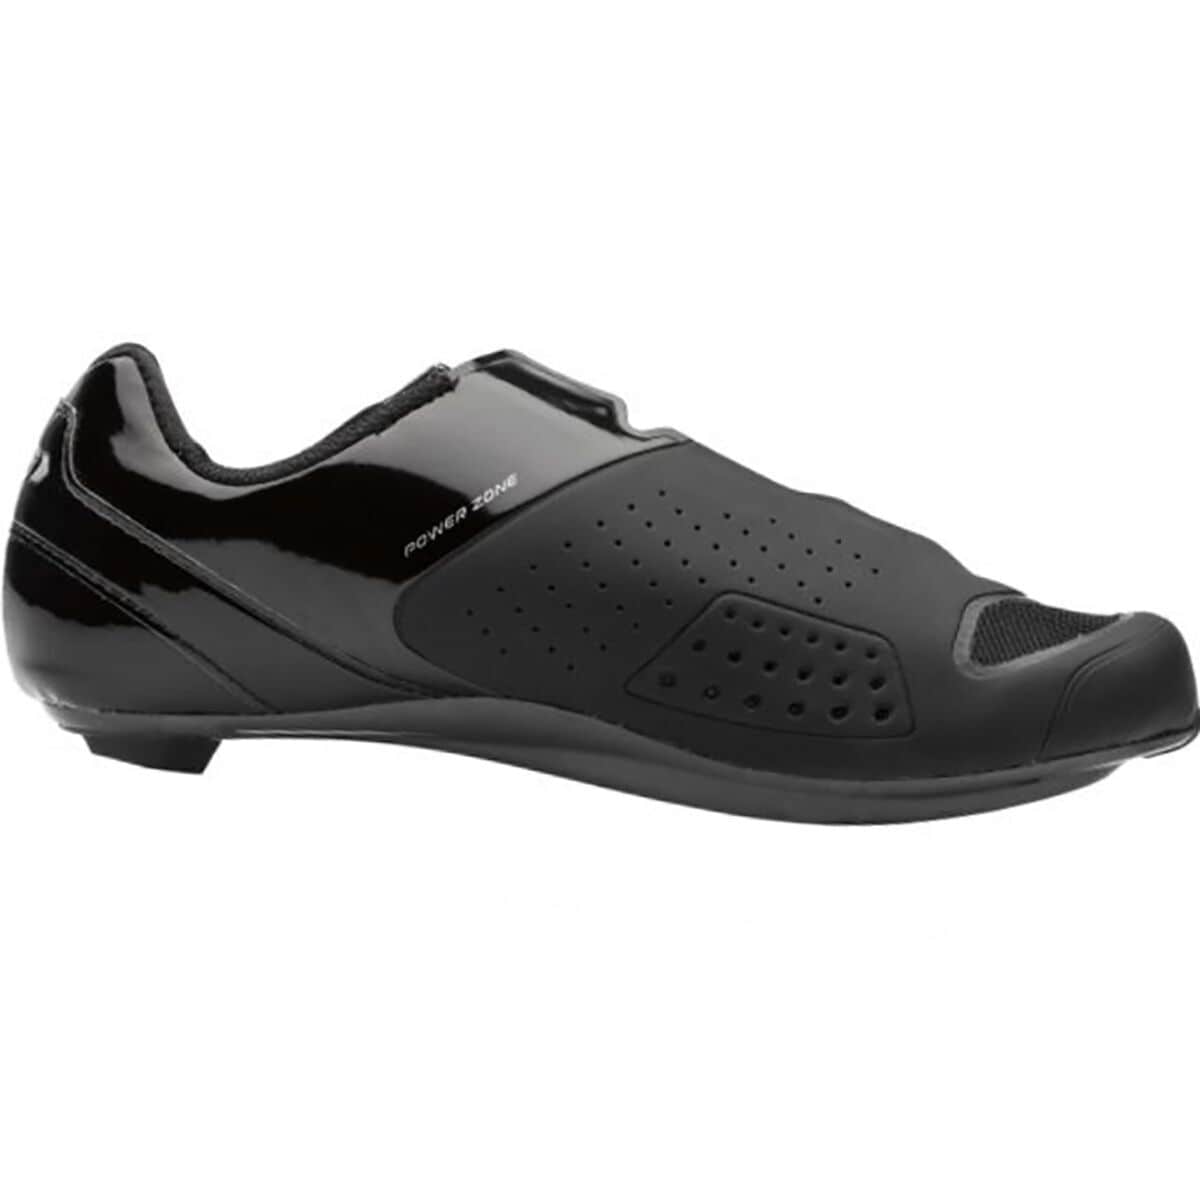 Louis Garneau Carbon T-Flex LS-100 Mens Cycling Shoe Black/Wht 37 EU NIB